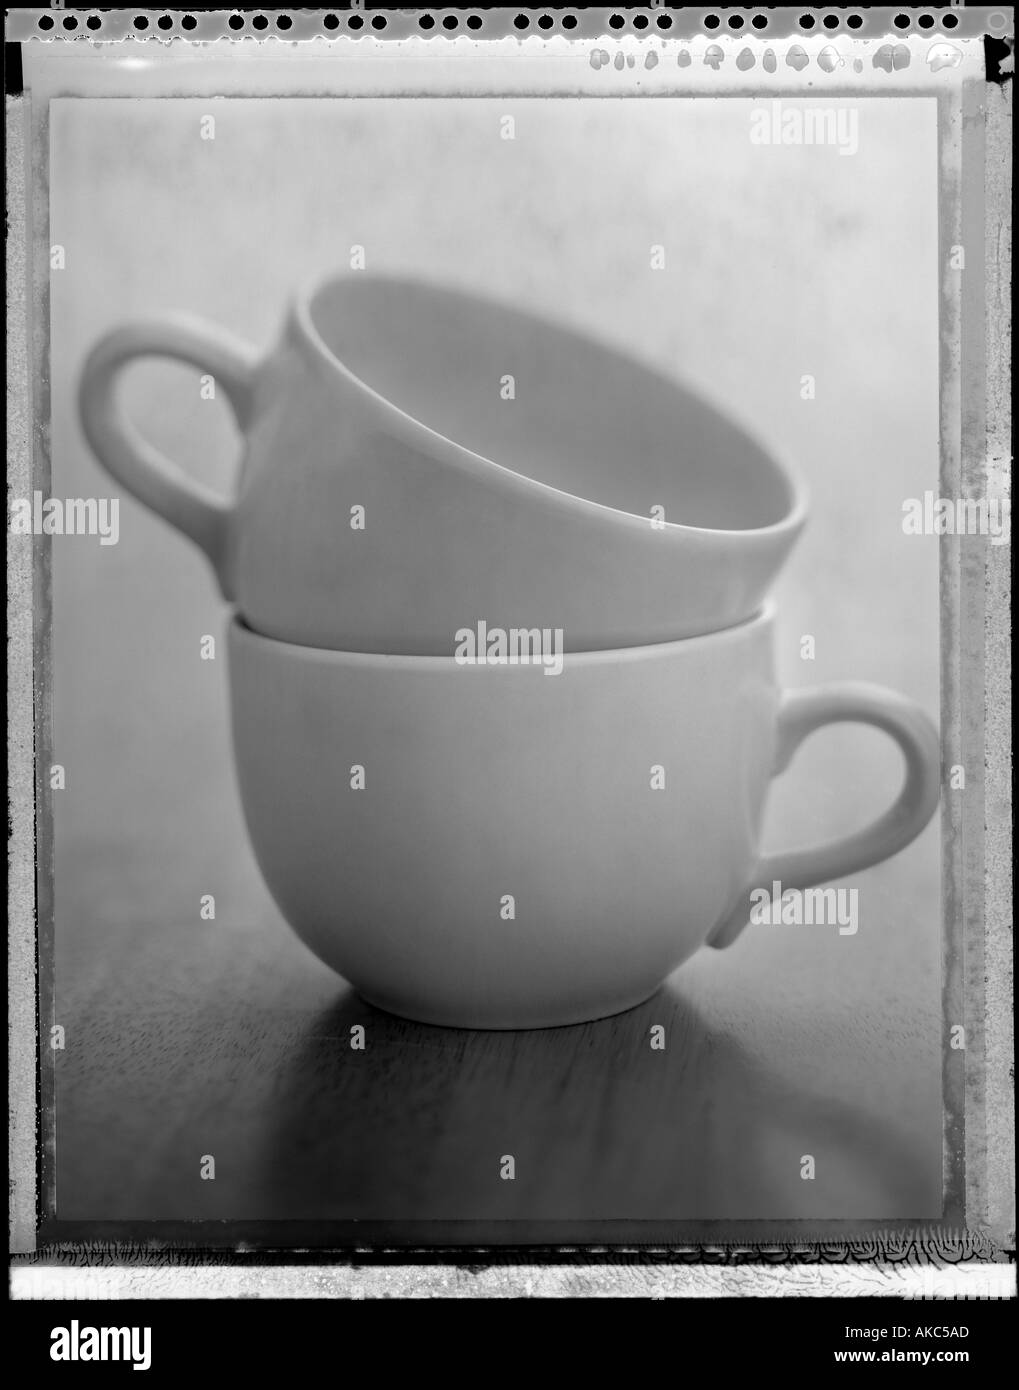 coffee mugs Stock Photo